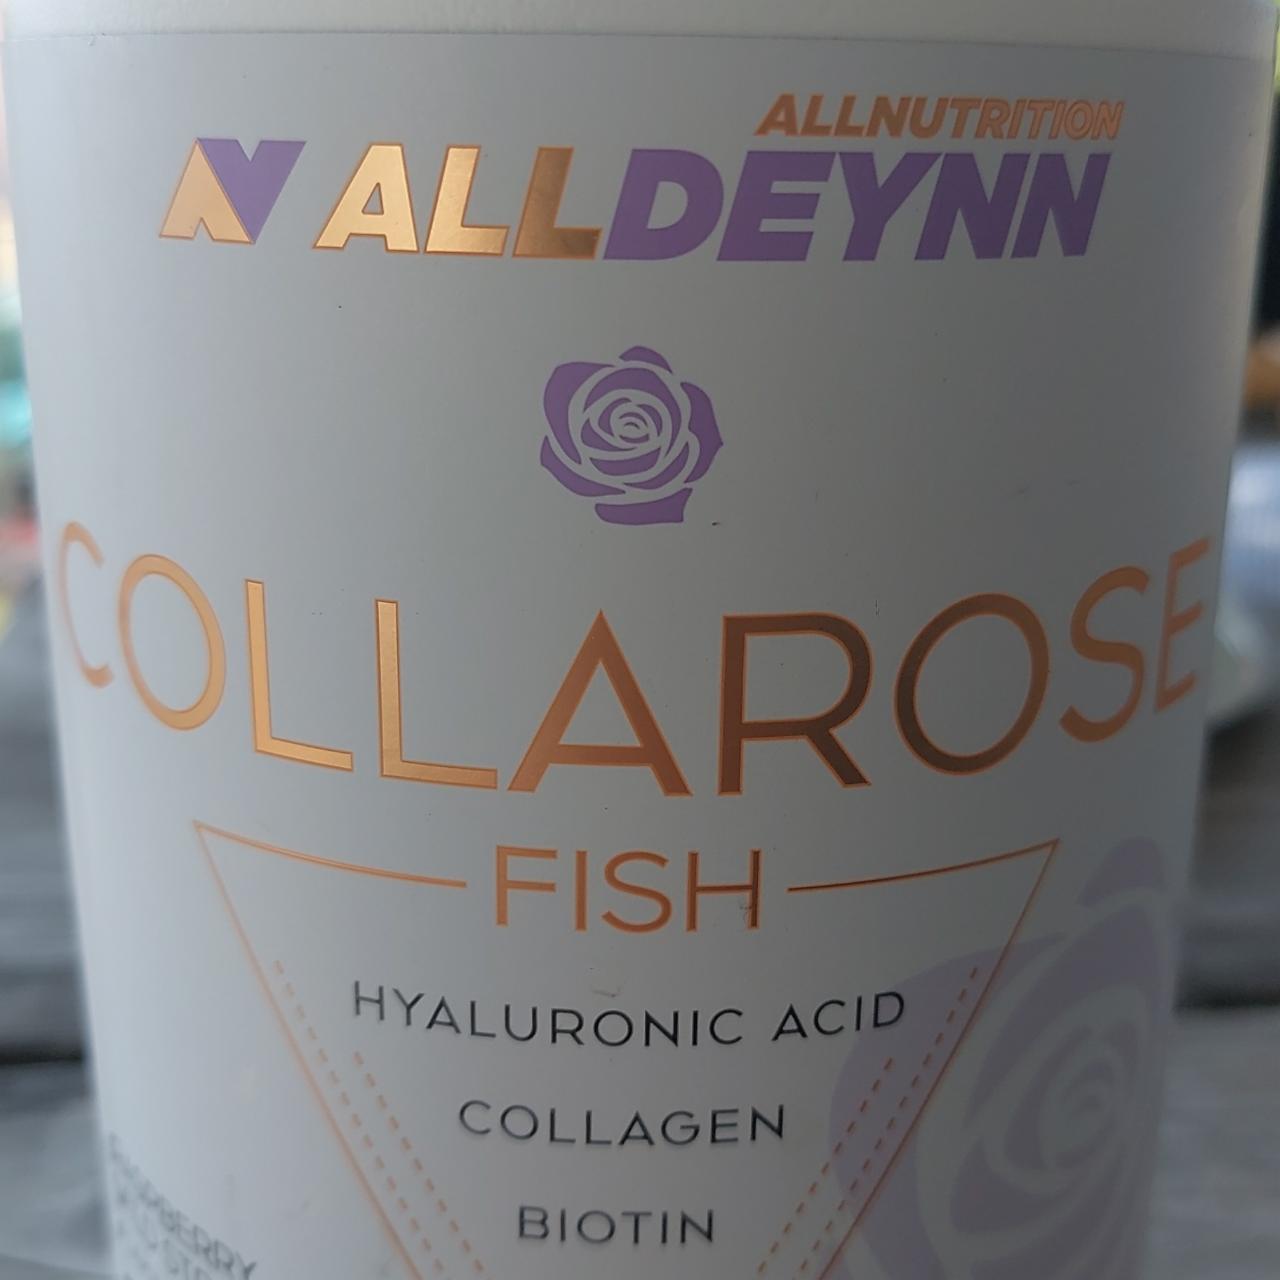 Fotografie - Alldeynn Collarose Fish Collagen Raspbery & Wild Strawberry Allnutrition